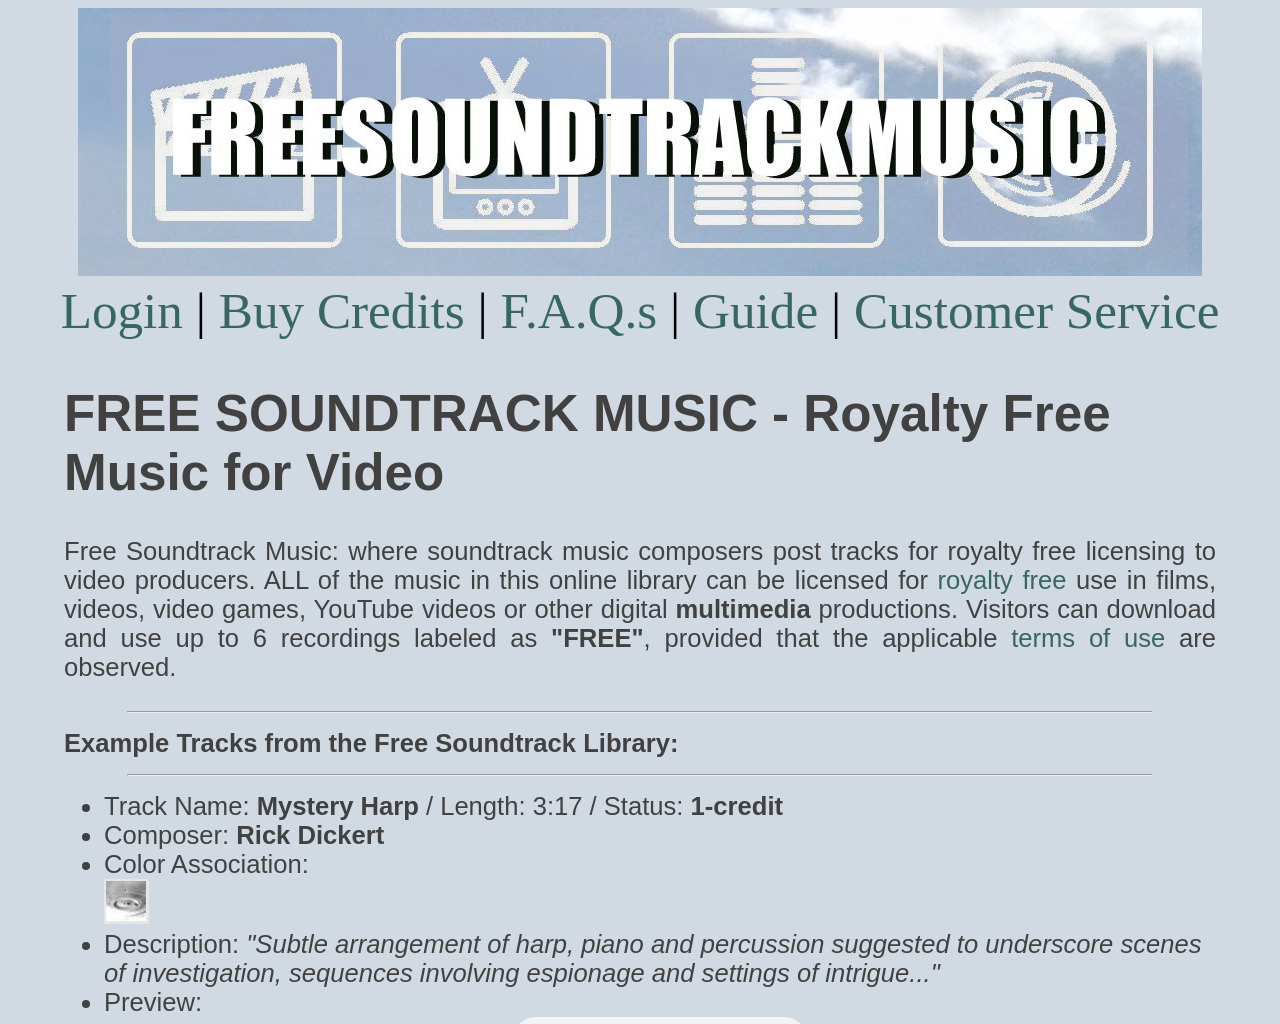 freesoundtrackmusic.com